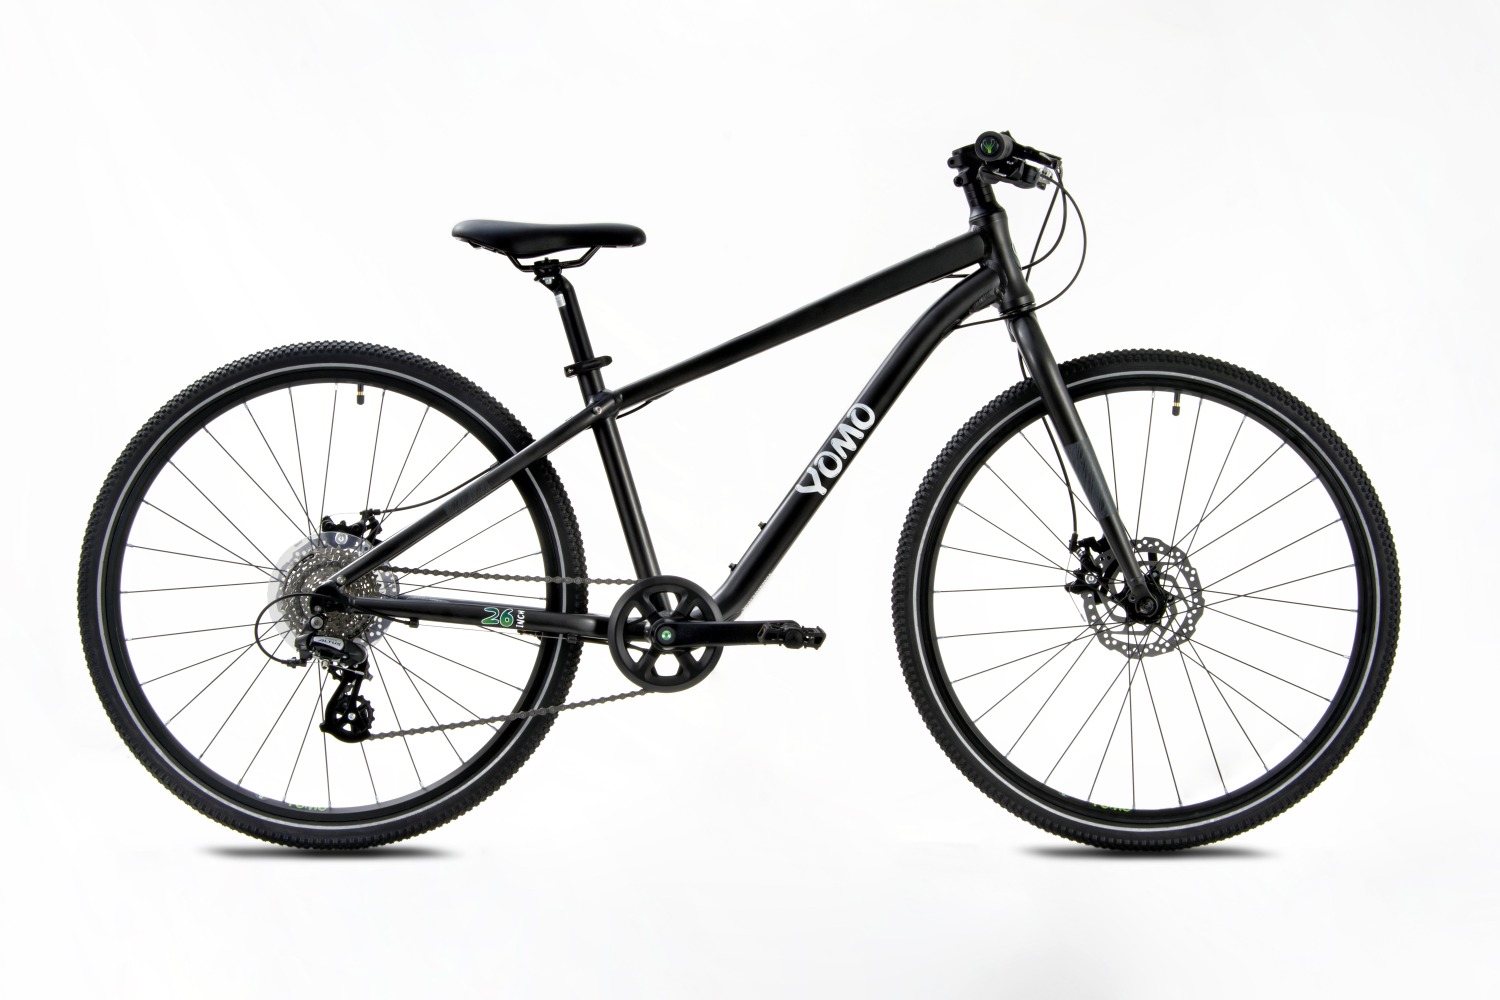 26" wheel kids bike with disc brakes - the YOMO 26 in black colour